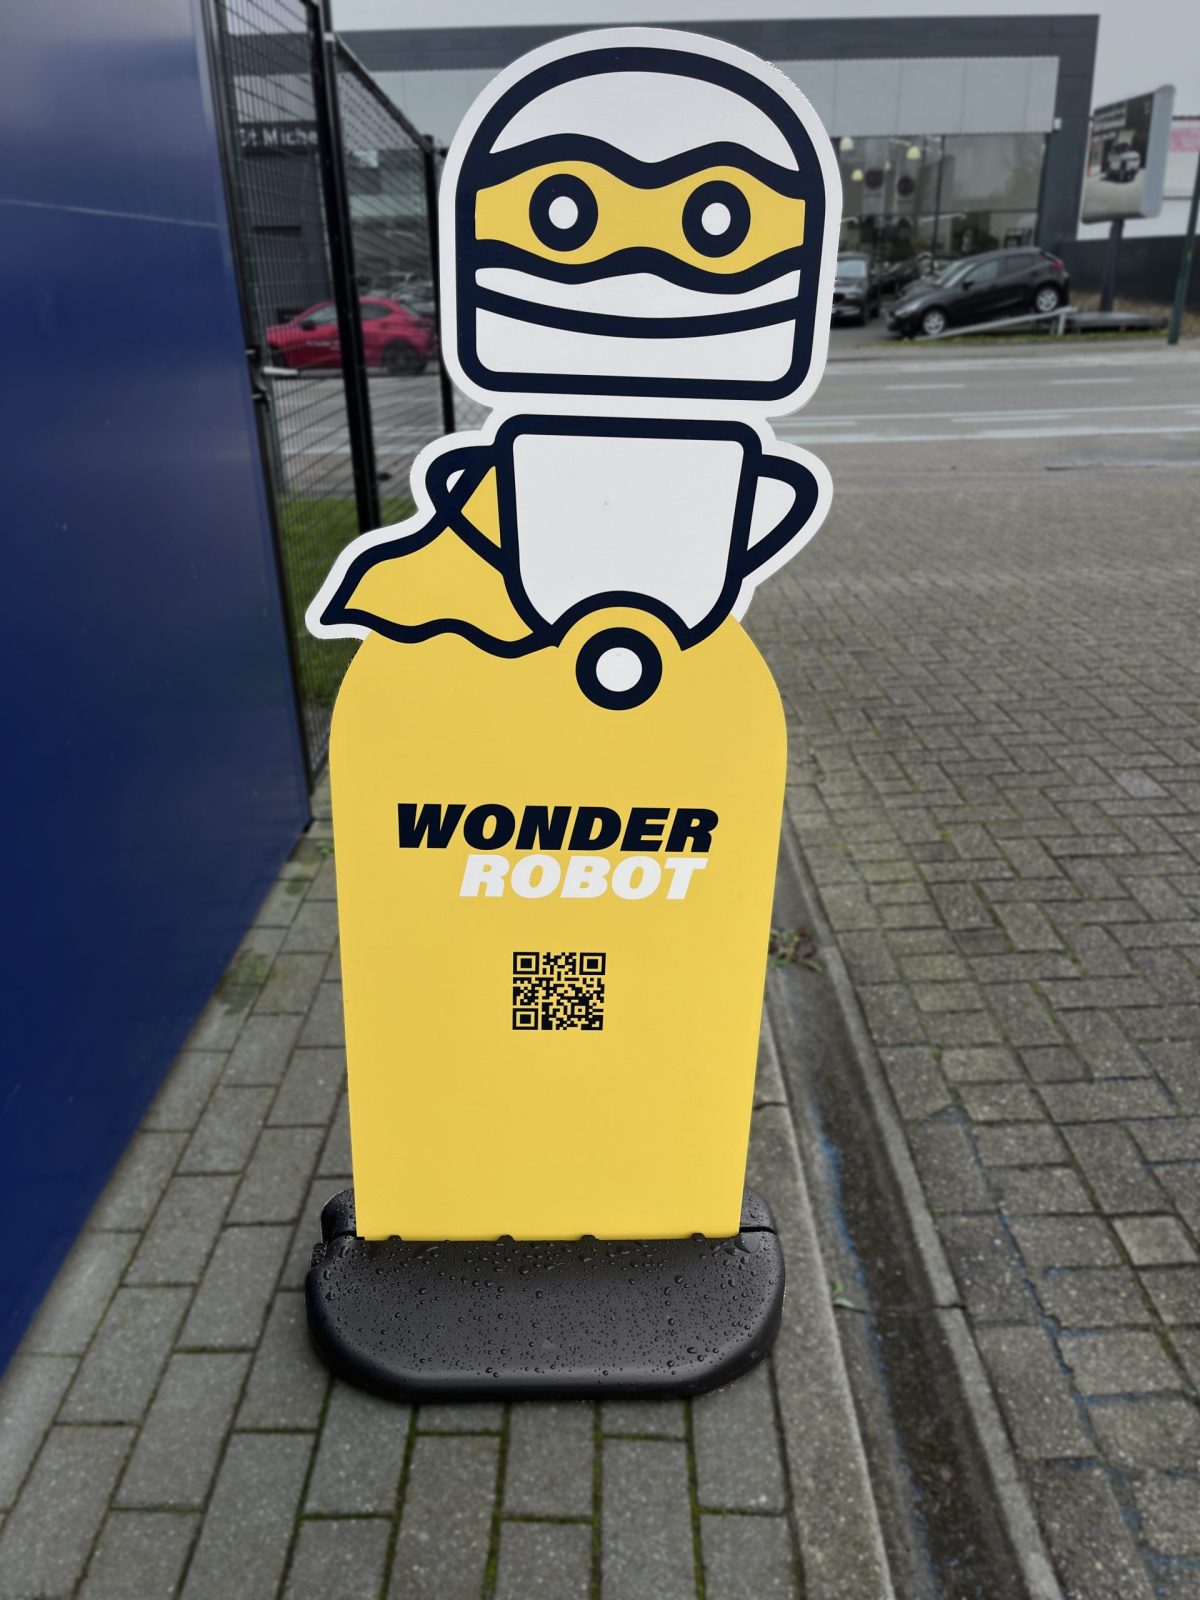 Wondercar